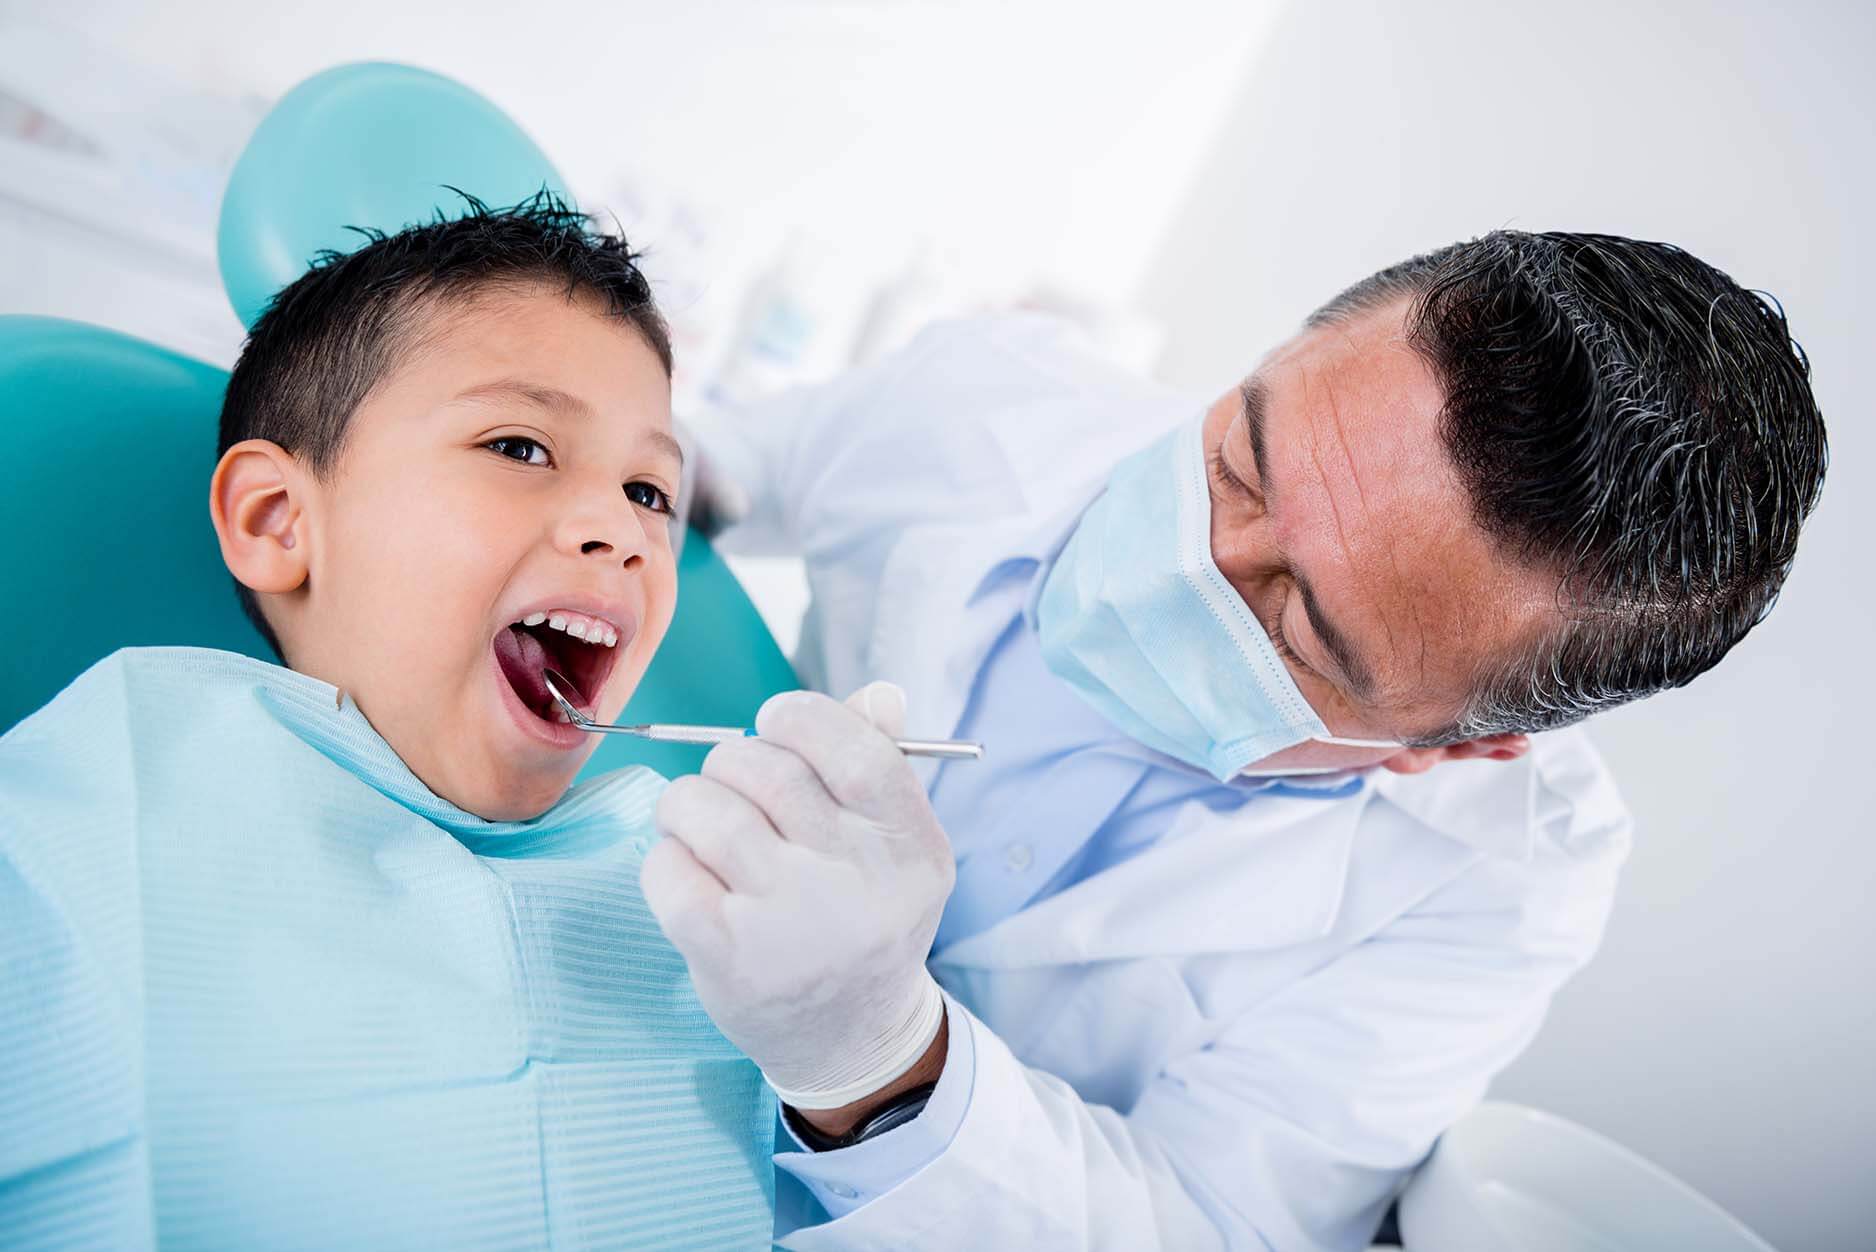 Multi-tooth Pediatric Dental Restoration – Restorative Pedo Crowns